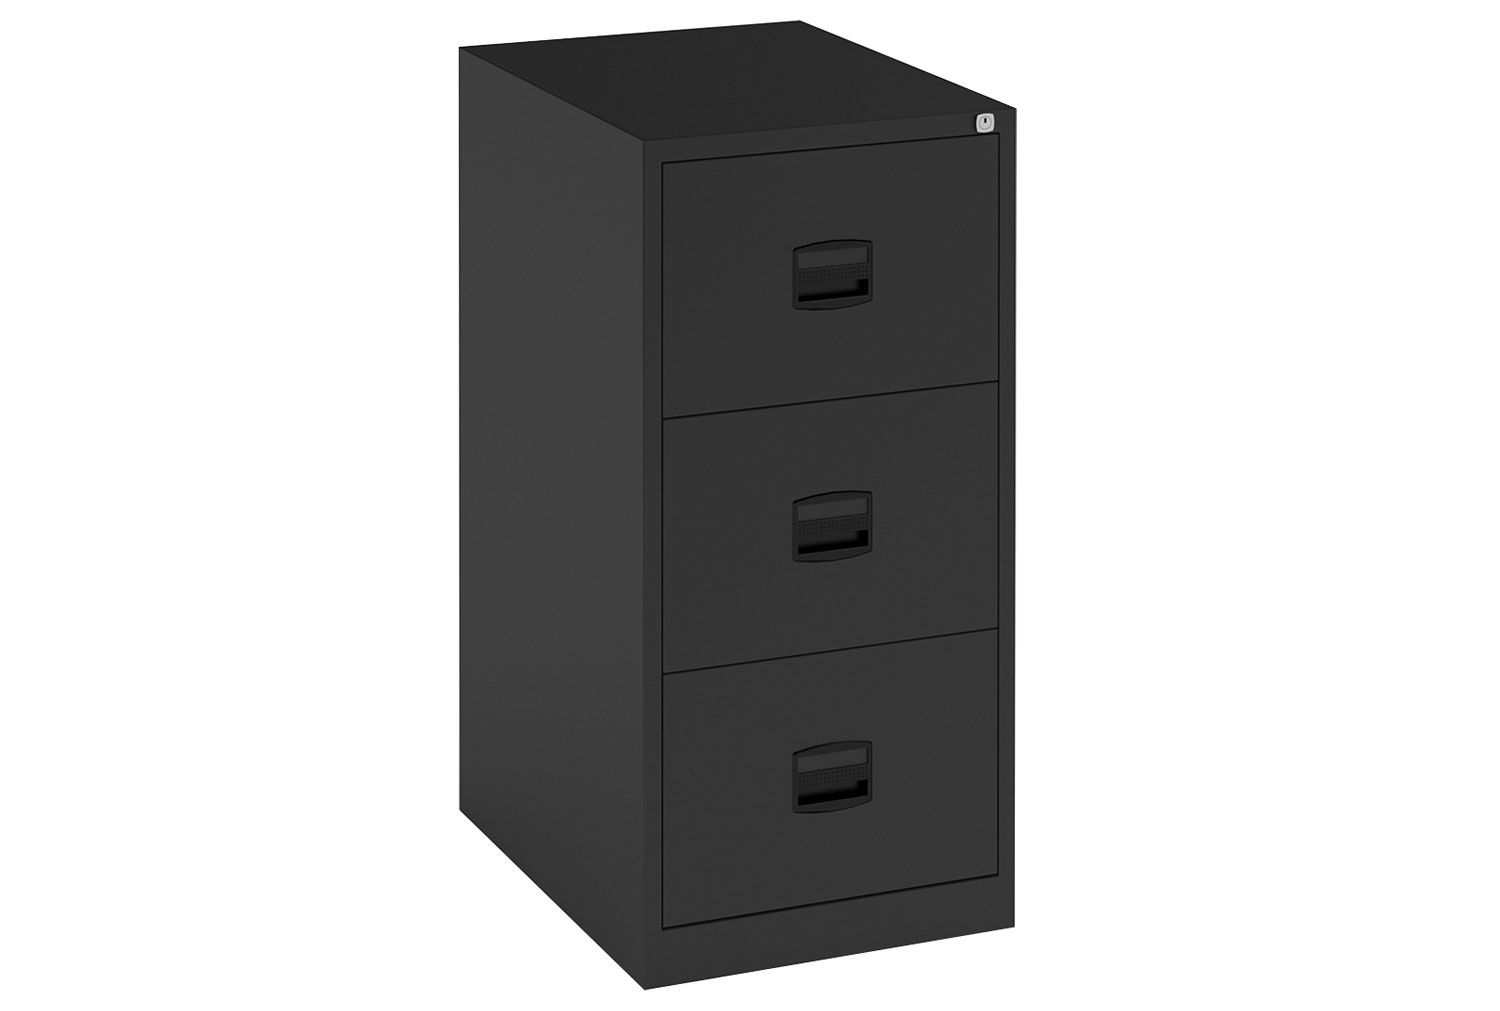 Bisley Economy Filing Cabinet (Central Handle), 3 Drawer - 47wx62dx102h (cm), Black, Express Delivery